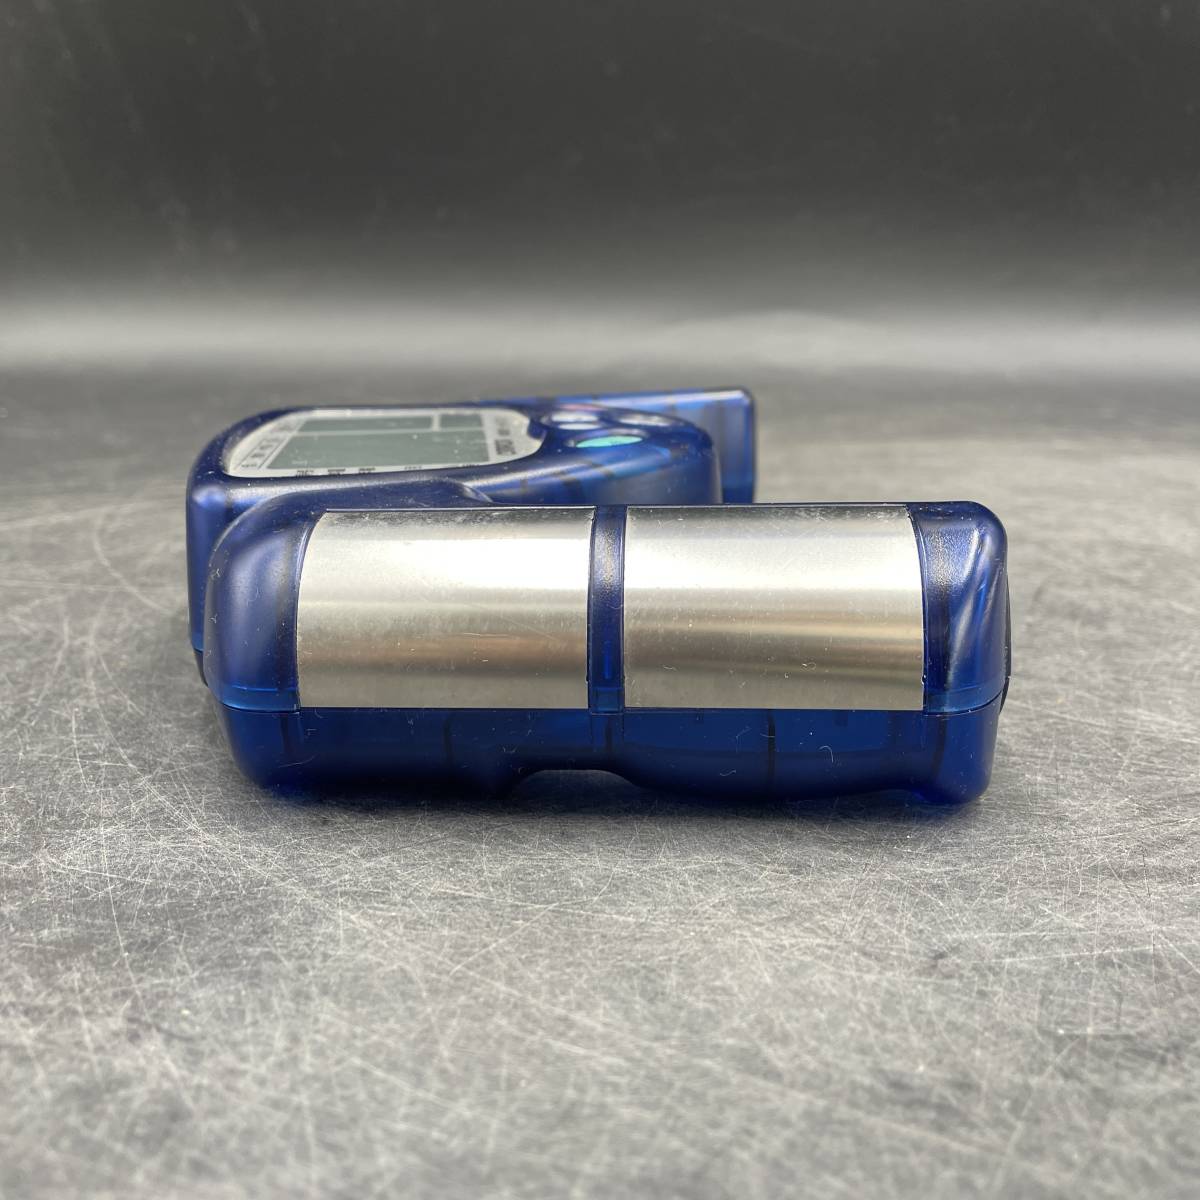 OMRON/ Omron body fat meter health appliances [HBF-306]